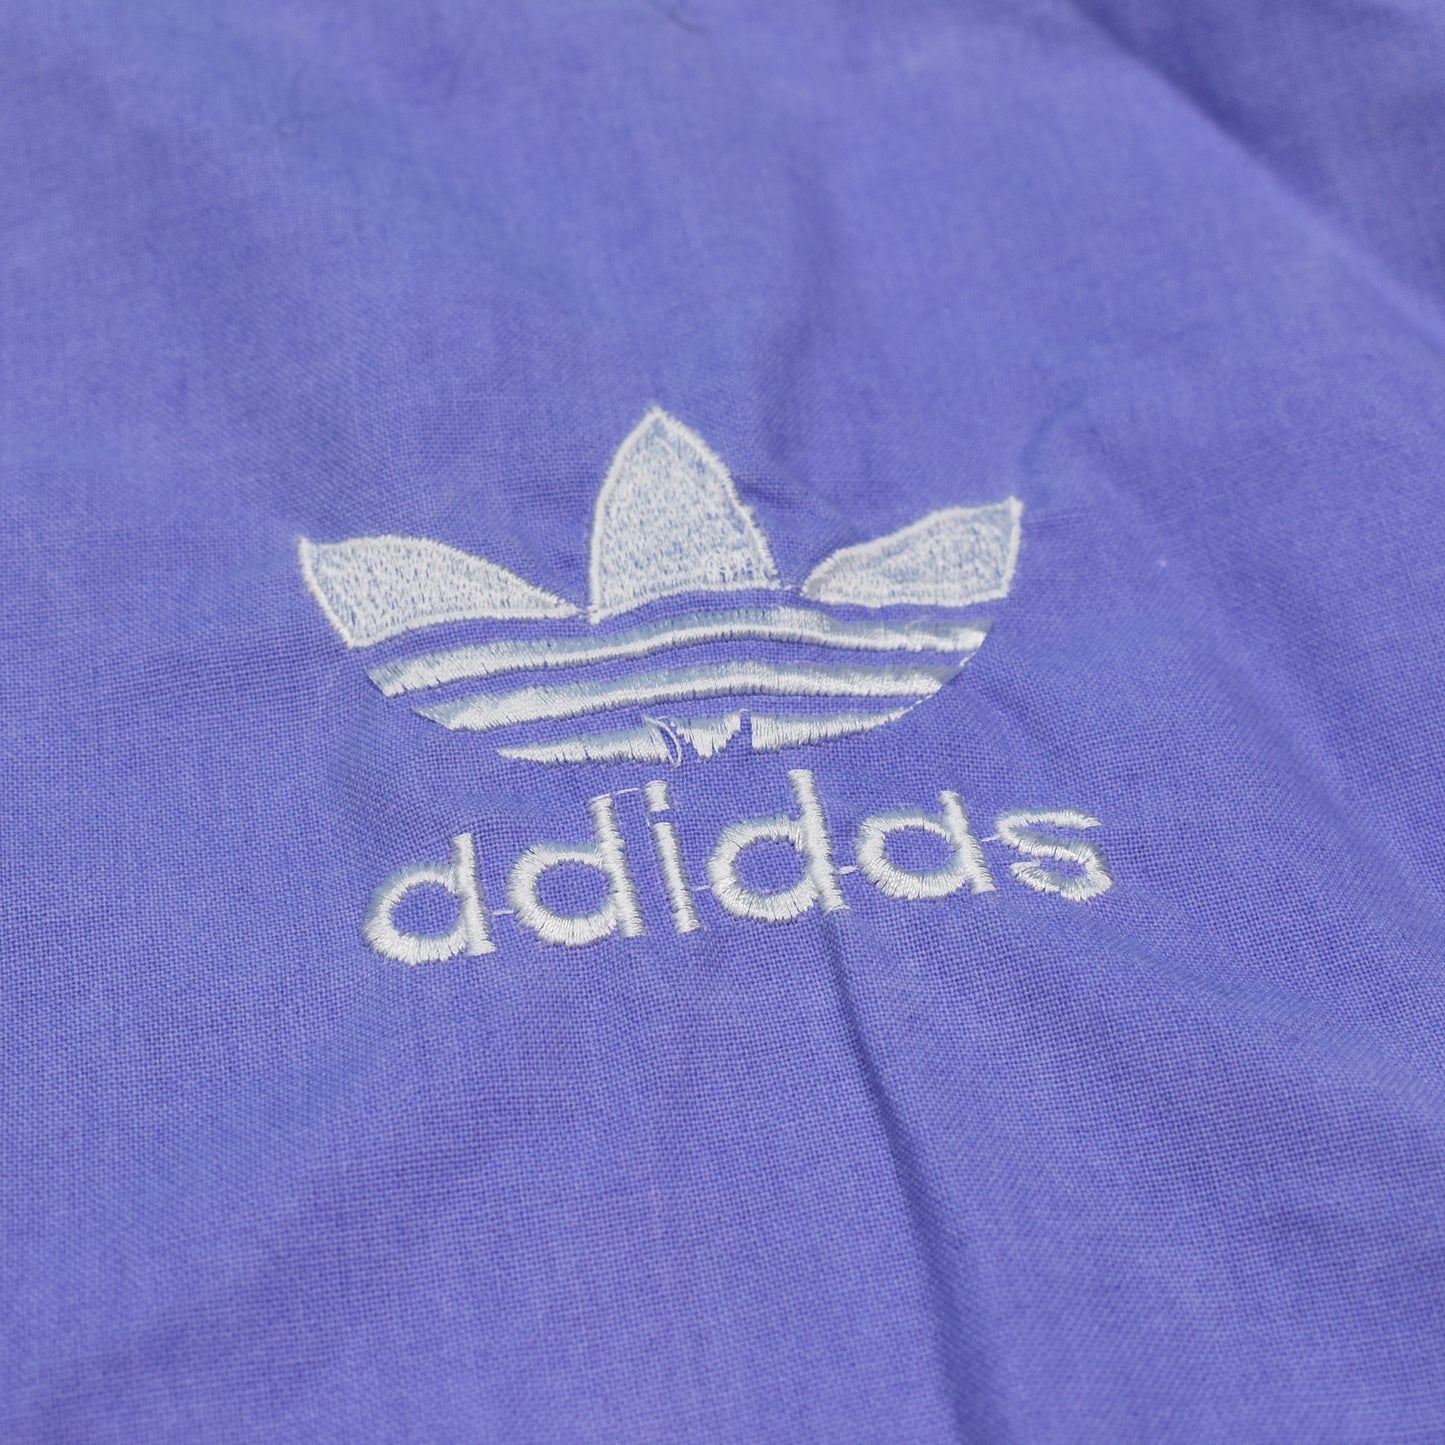 Adidas - 1972 Olympic Sweatshirt